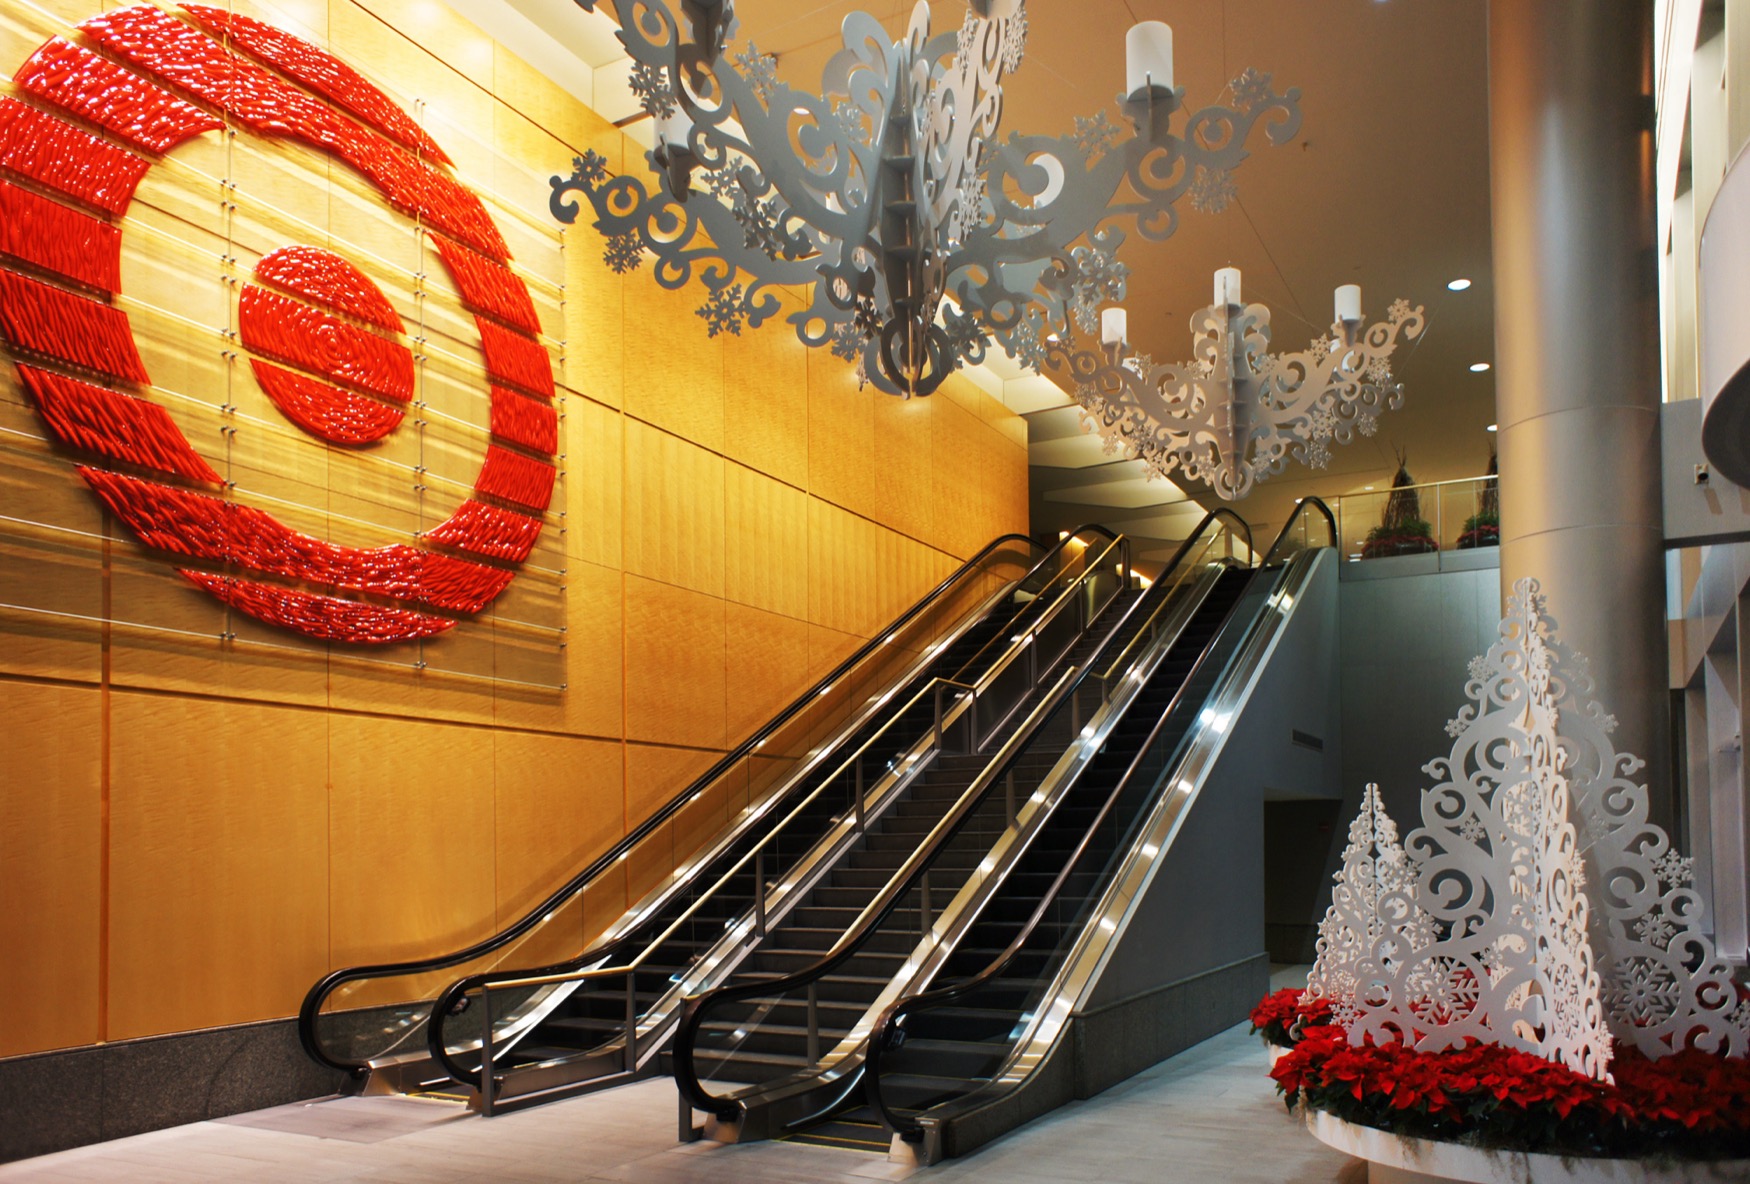 Target wall hanging logo above an escalator